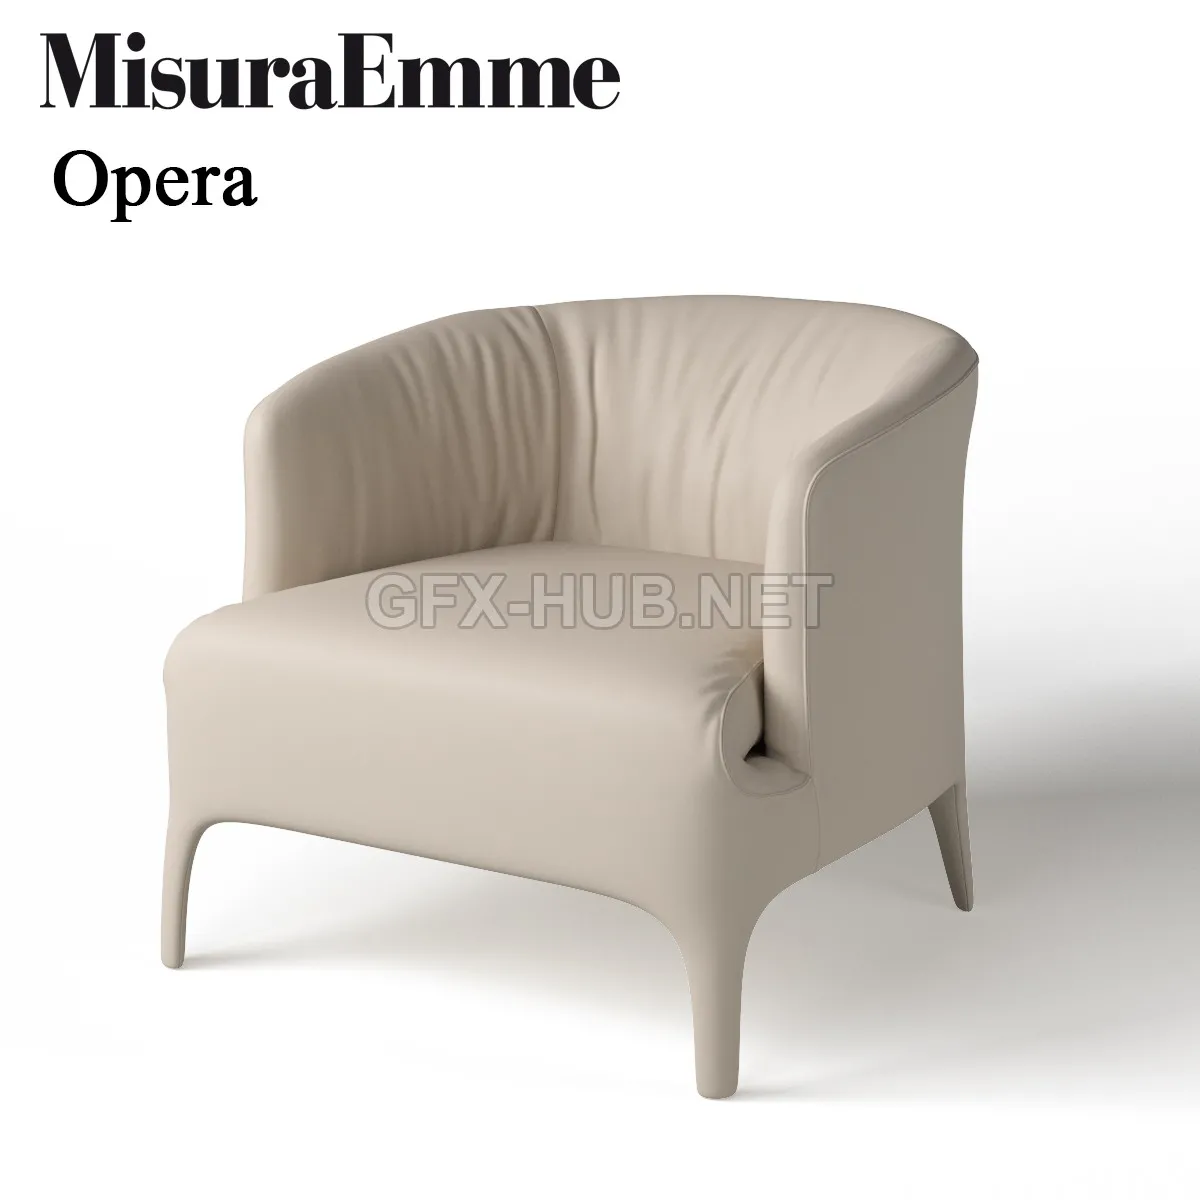 Armchair Misure Emme Opera (Max 2011Corona) – 206209